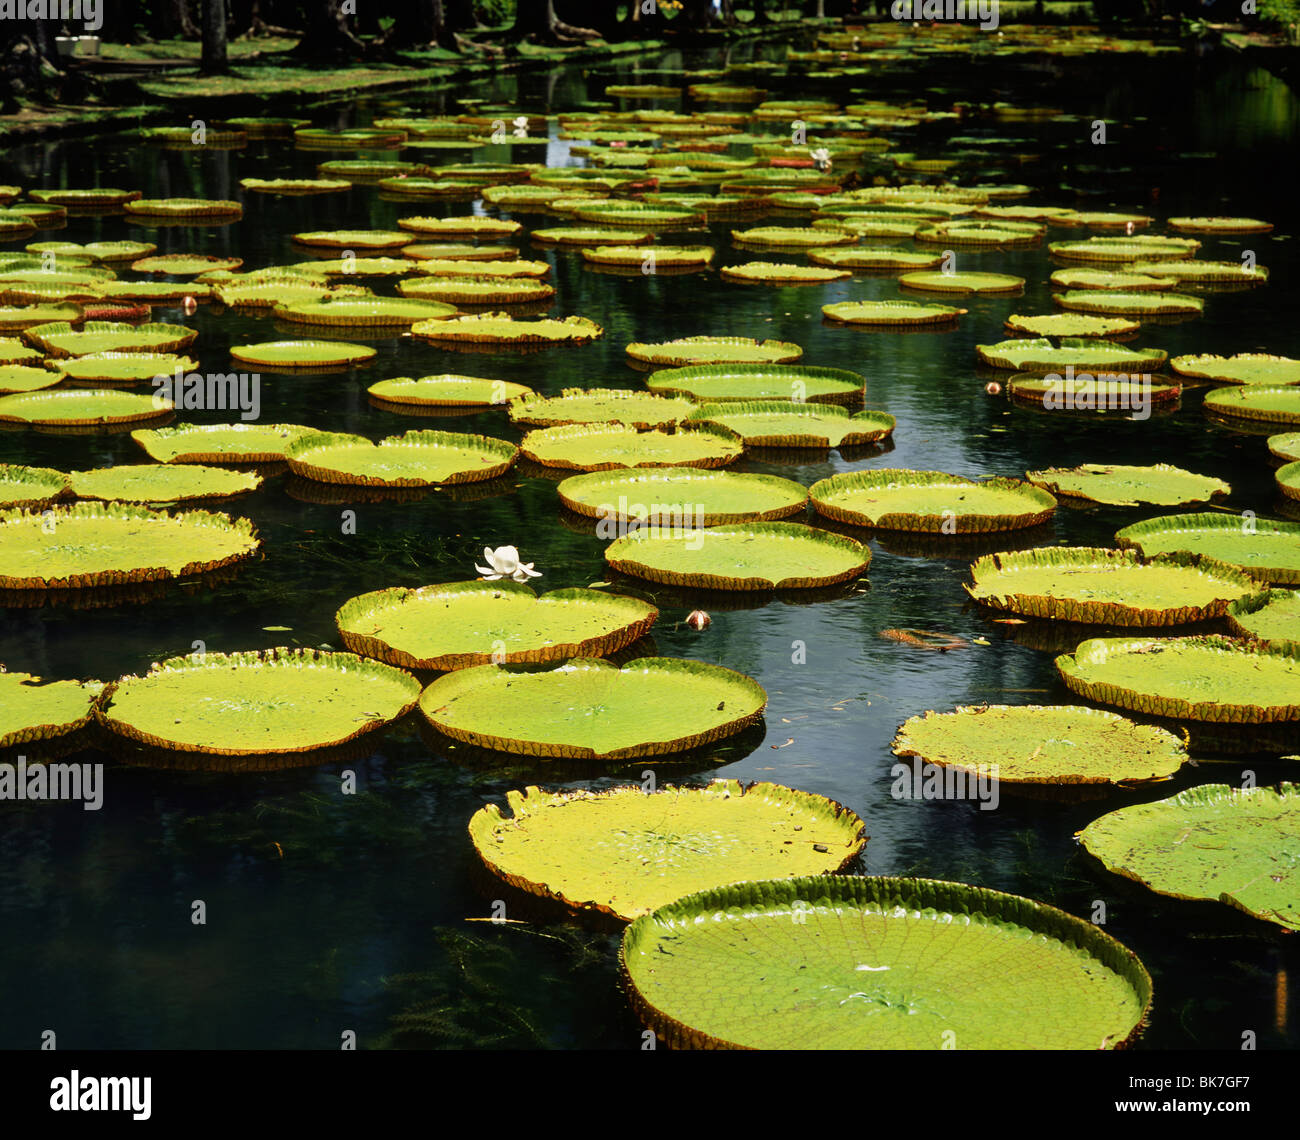 Victoria Regia Teich in Pamplemousses Botanischer Garten, Mauritius, Indischer Ozean, Afrika Stockfoto